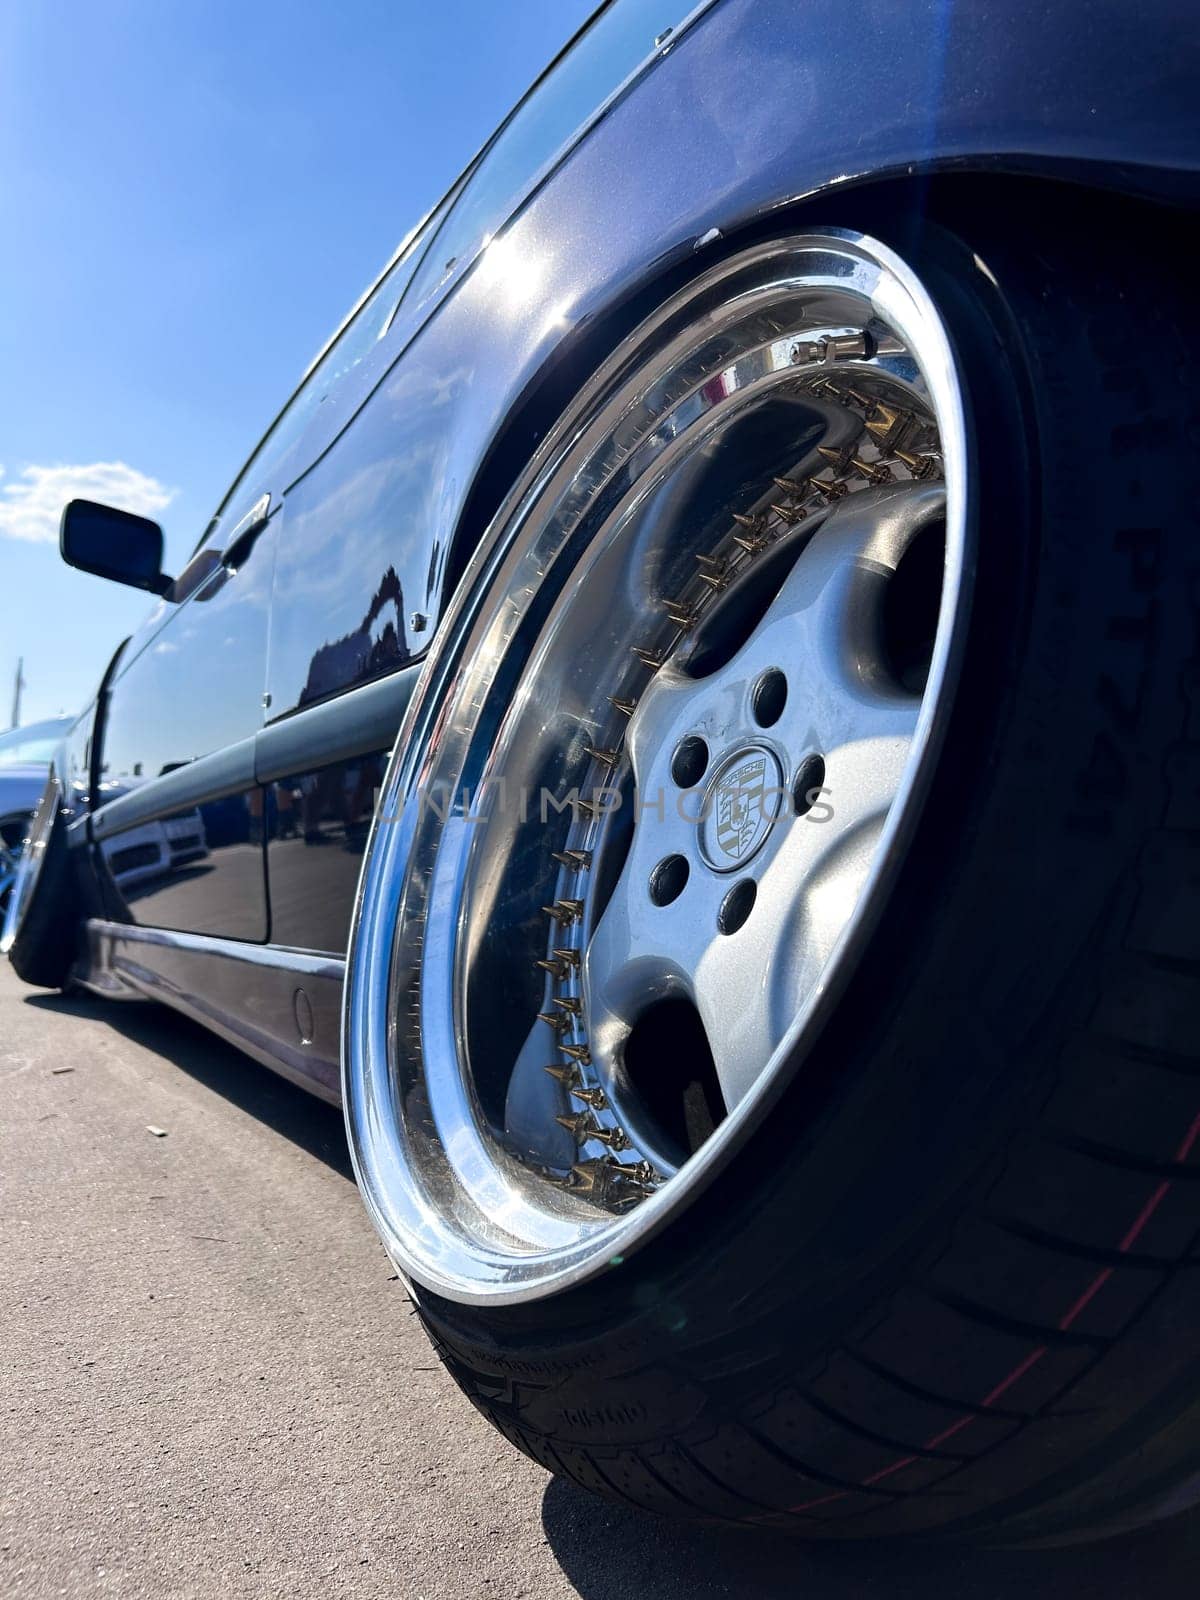 Black car silver Porsche disk wheel close up. High quality photo